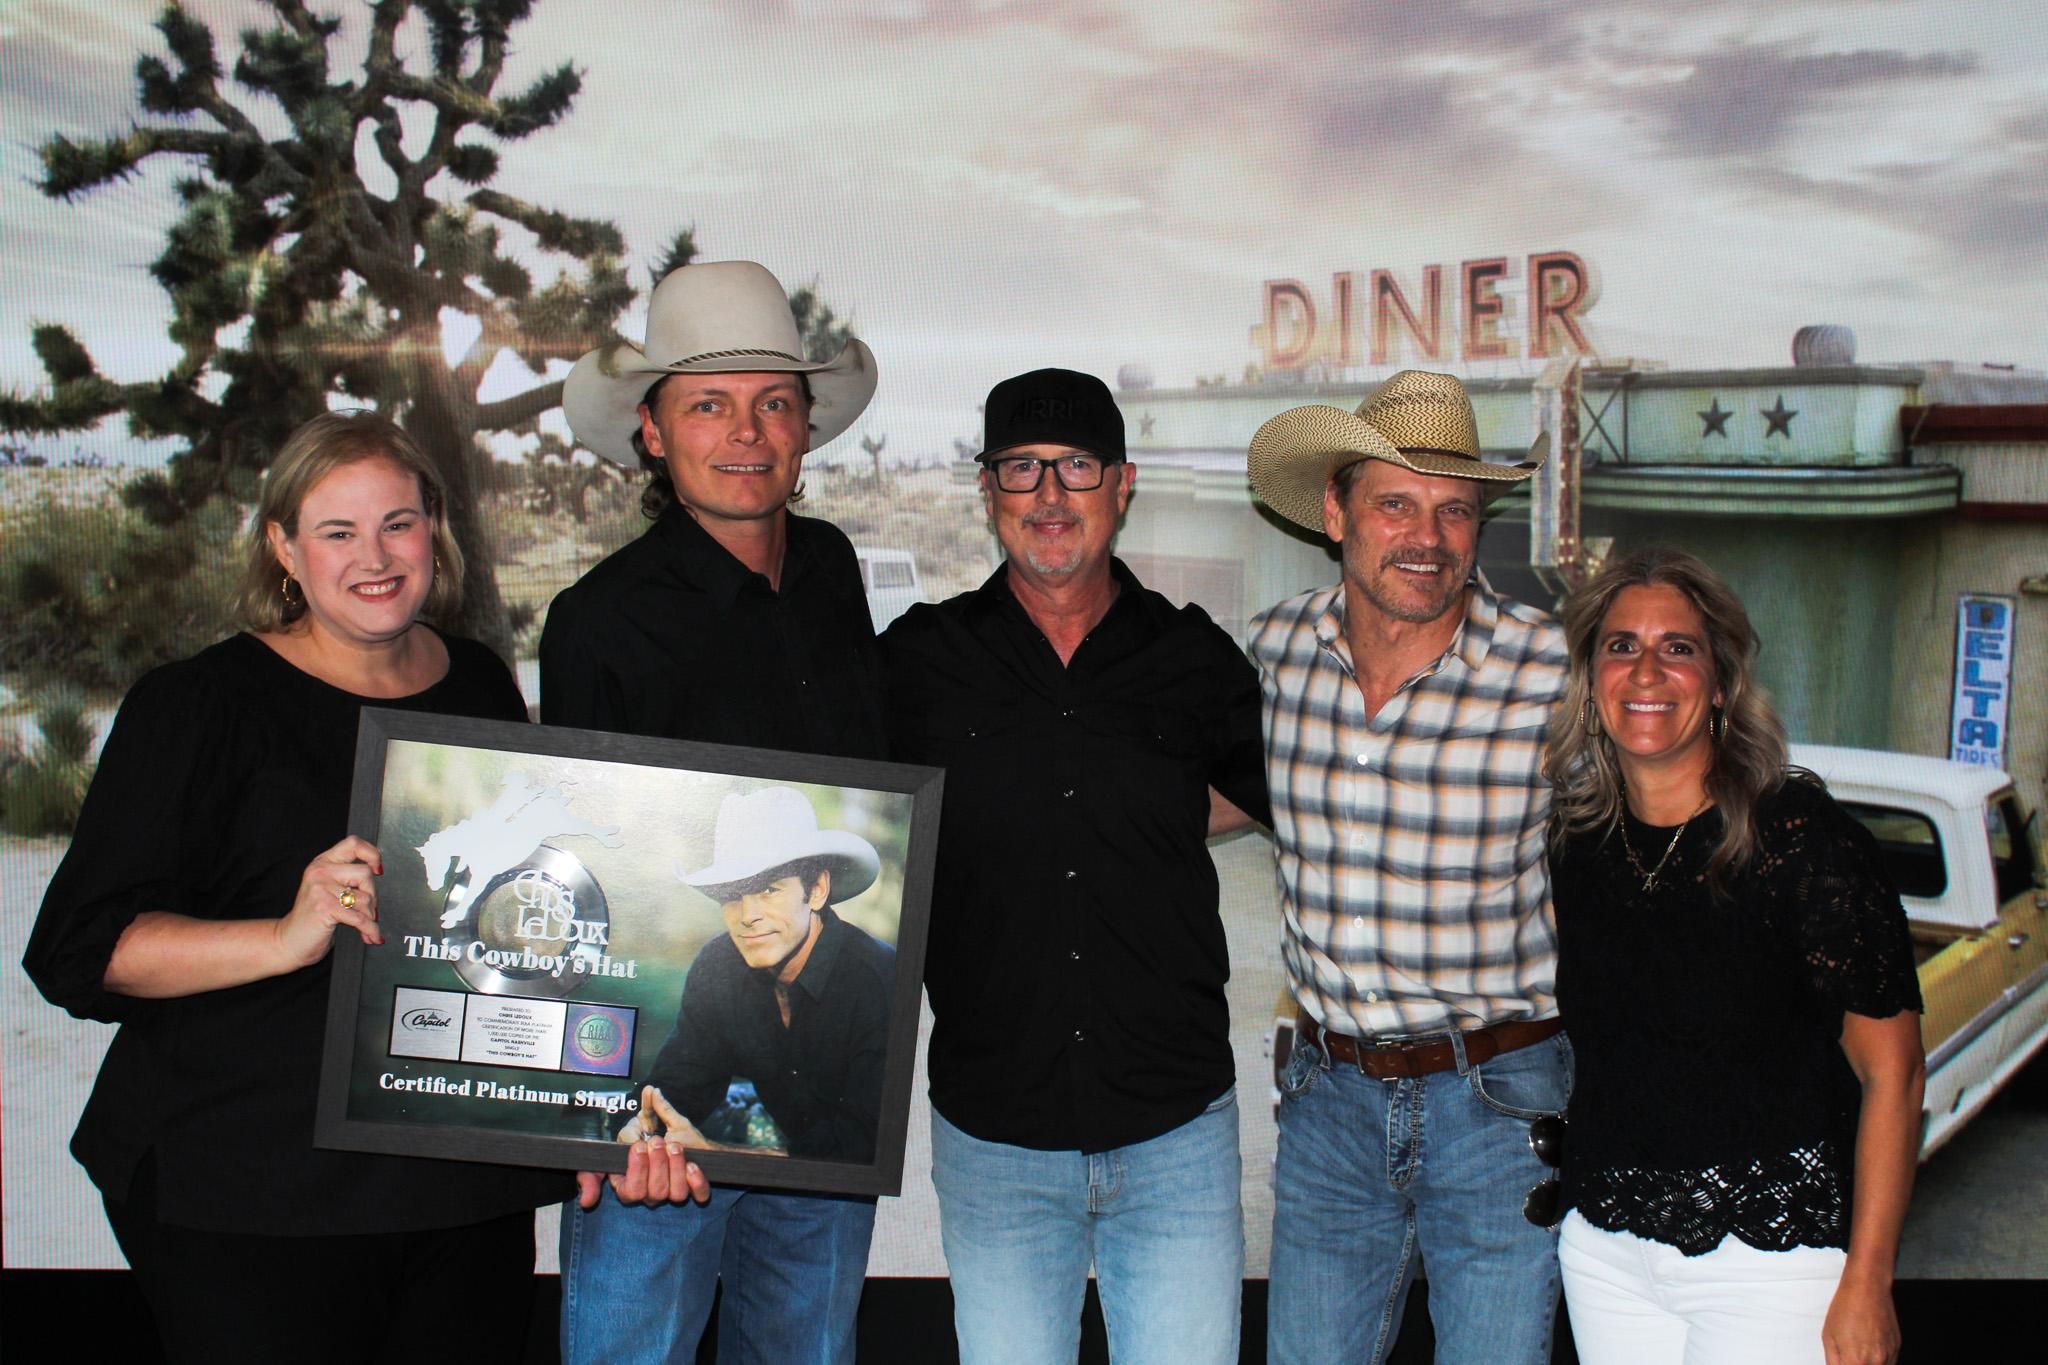 Chris LeDoux’s “This Cowboy’s Hat” Recognized with Platinum Plaque | Official Music Video Out Now